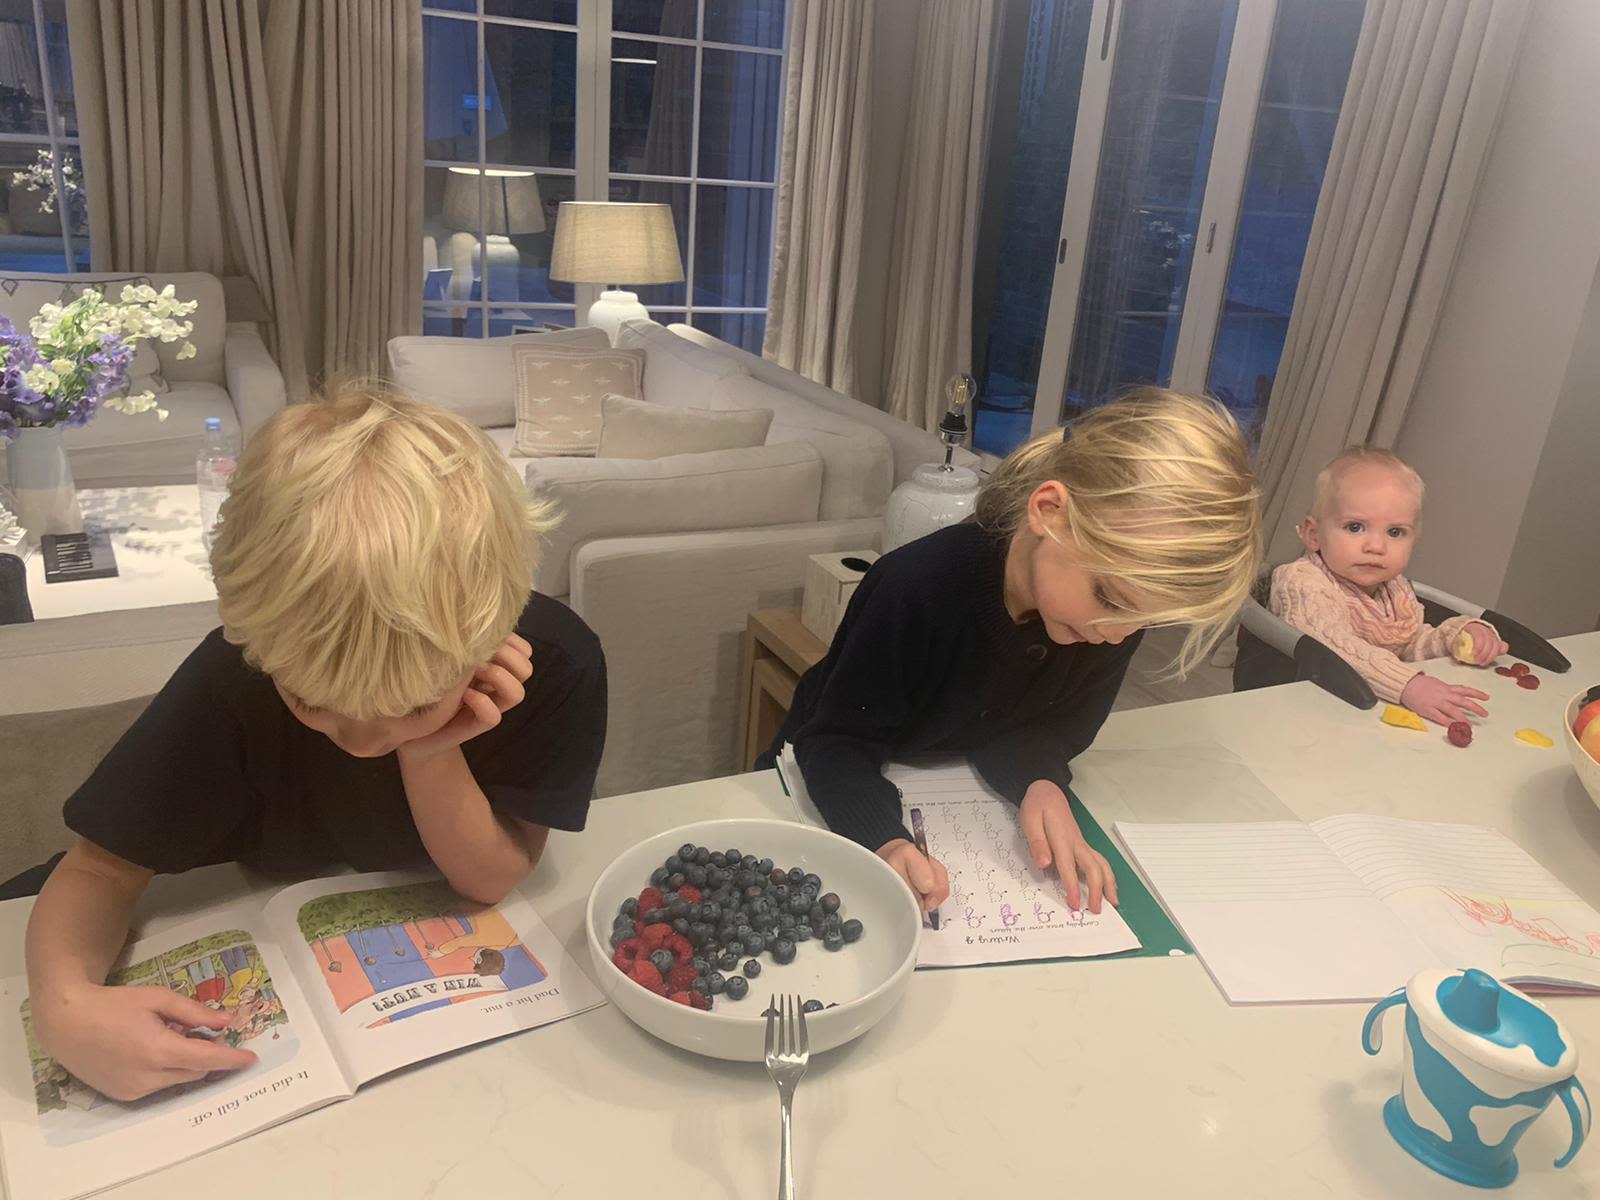 Holly Branson's children doing homework at the table